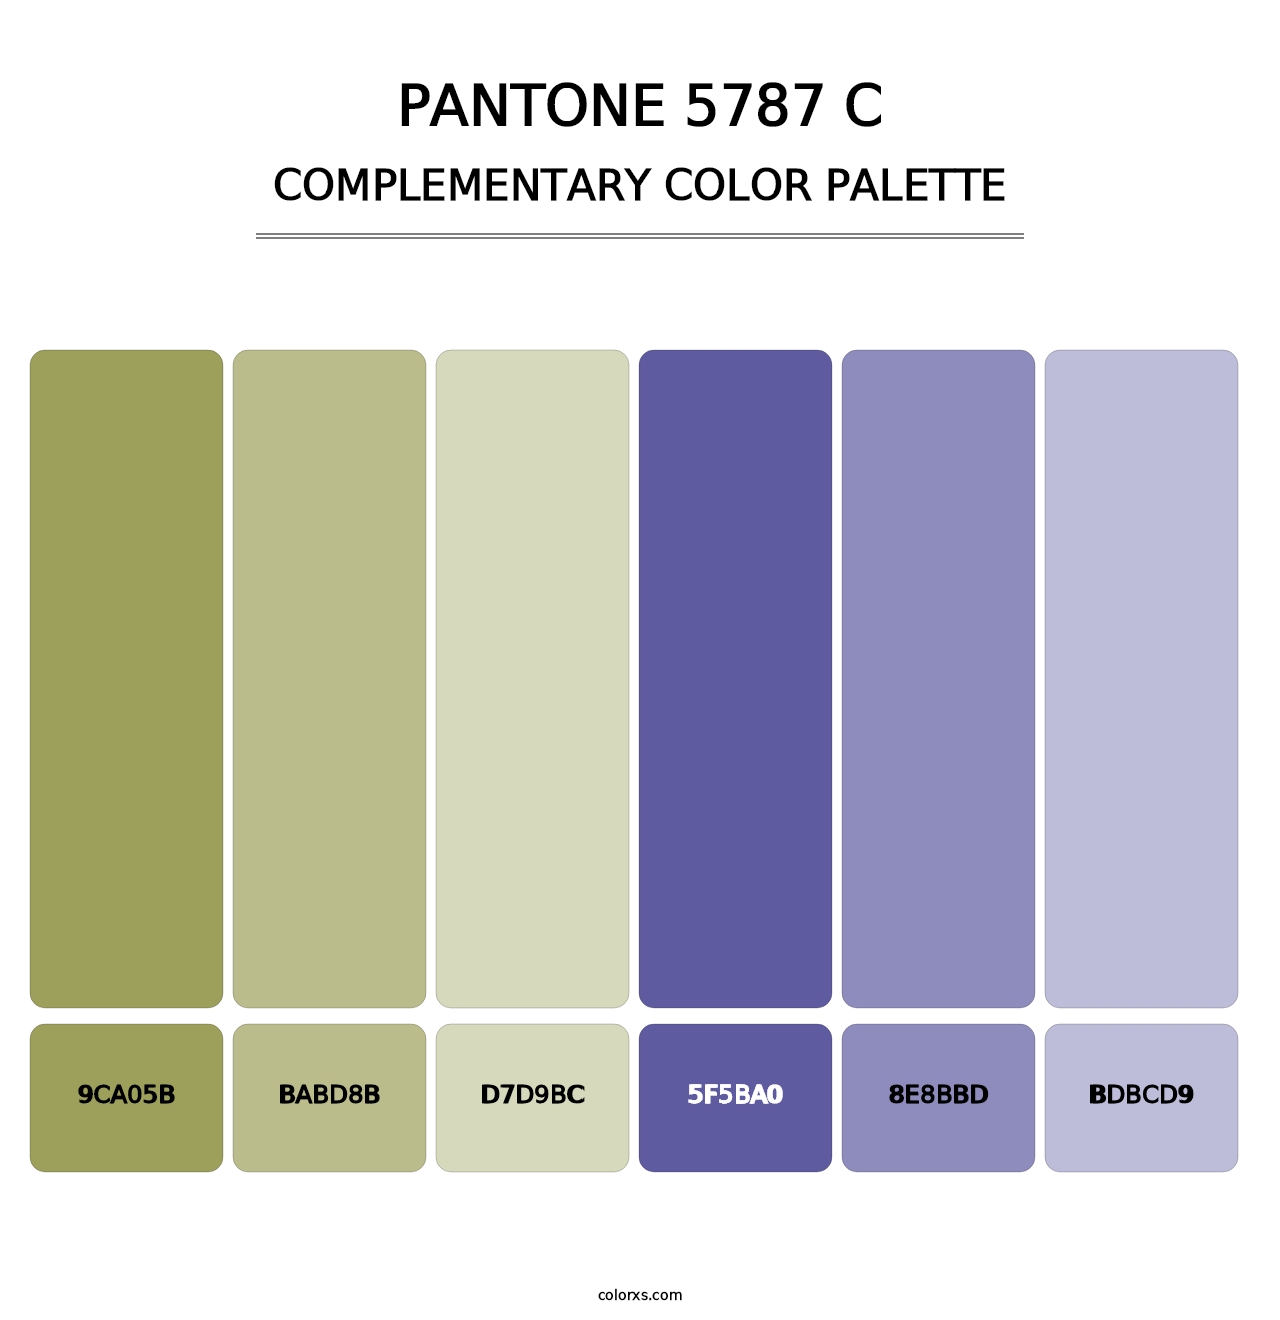 PANTONE 5787 C - Complementary Color Palette